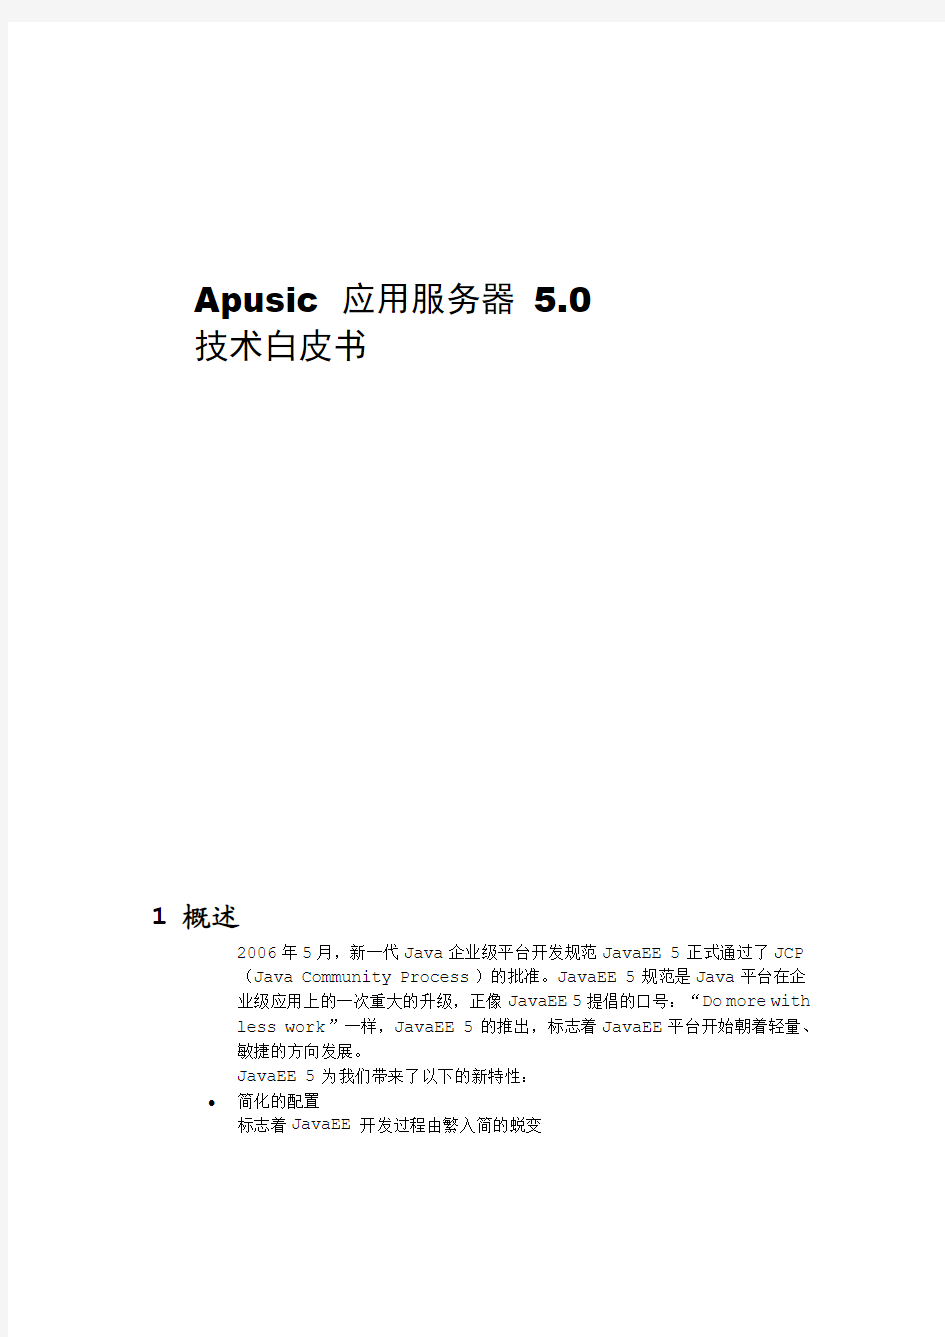 Apusic 应用服务器 5.0技术白皮书